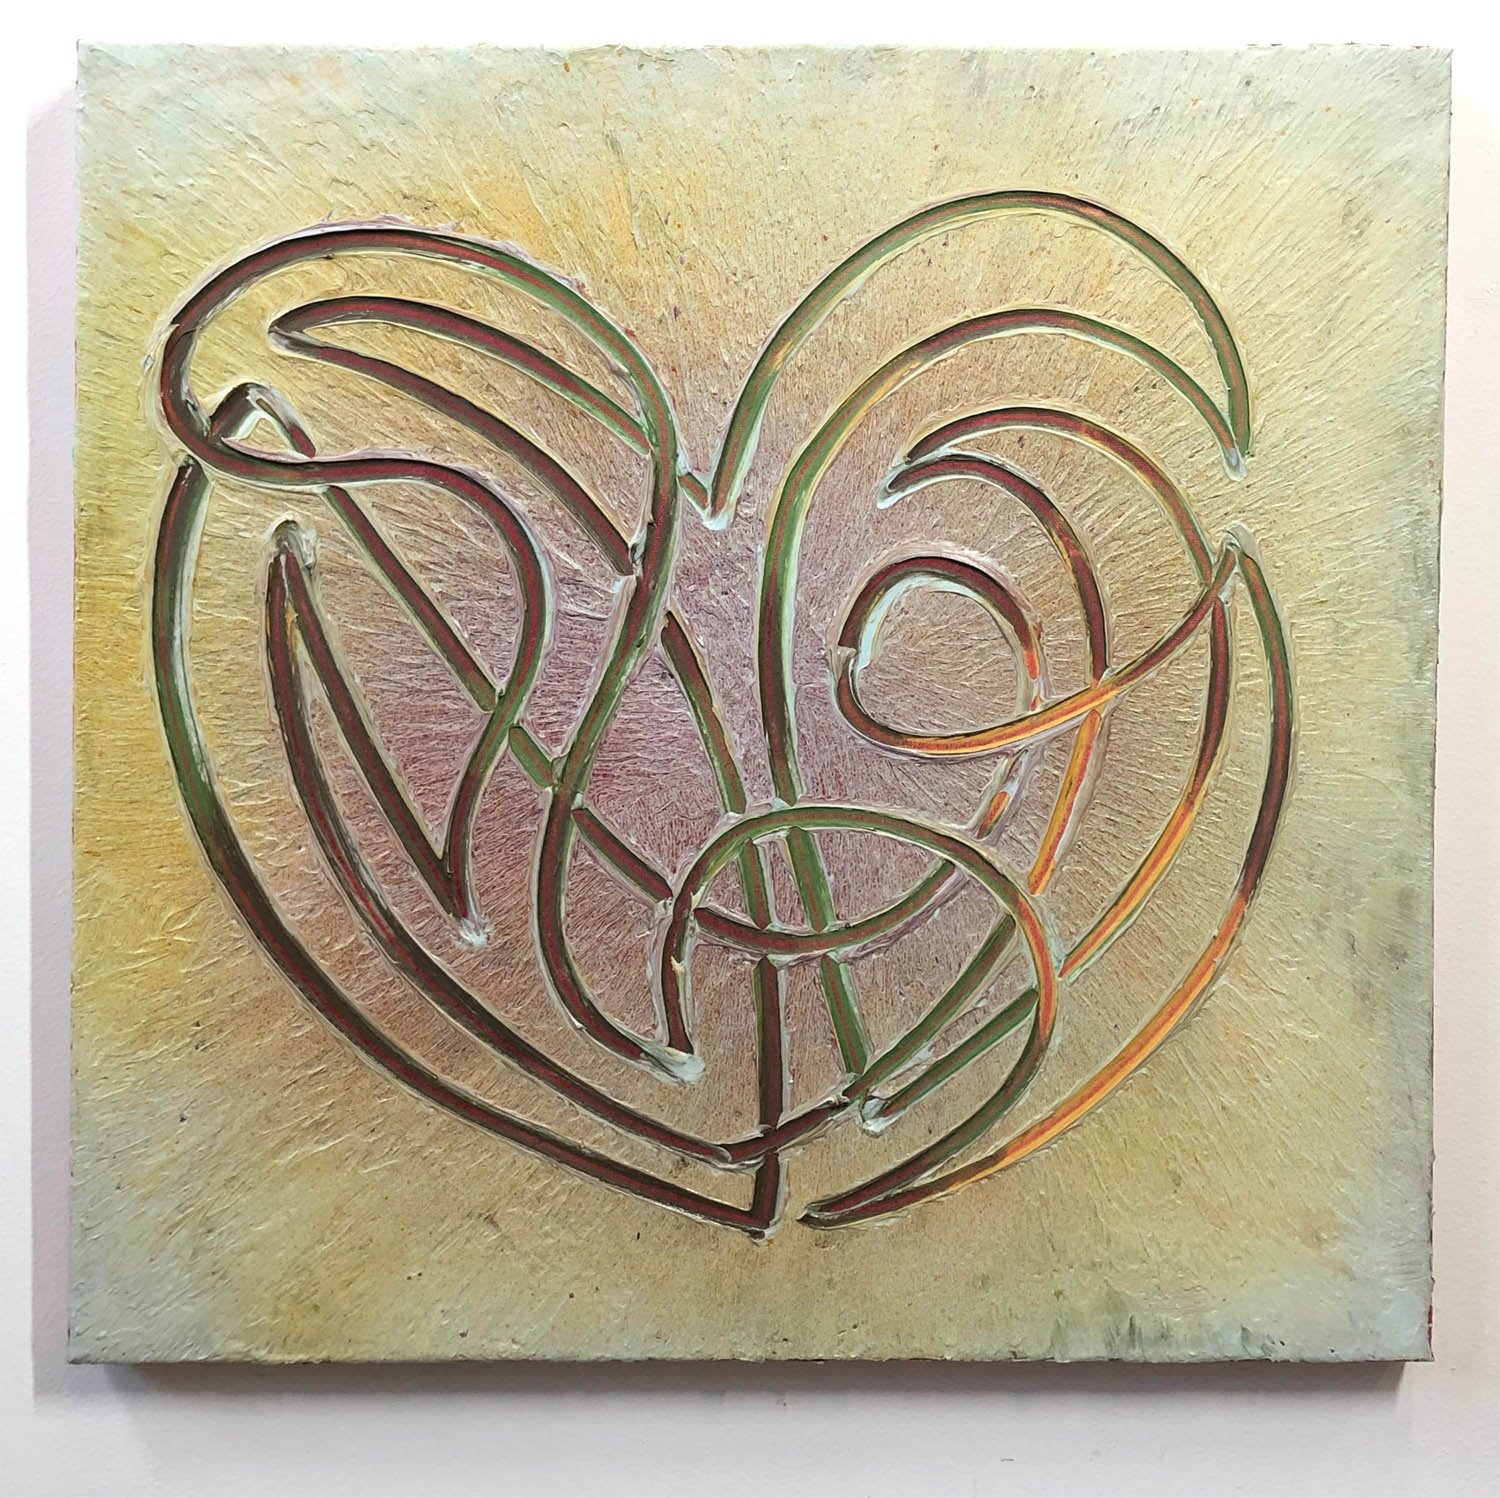   Summer Heart  acrylic on canvas 24” x 24” (SOLD) 